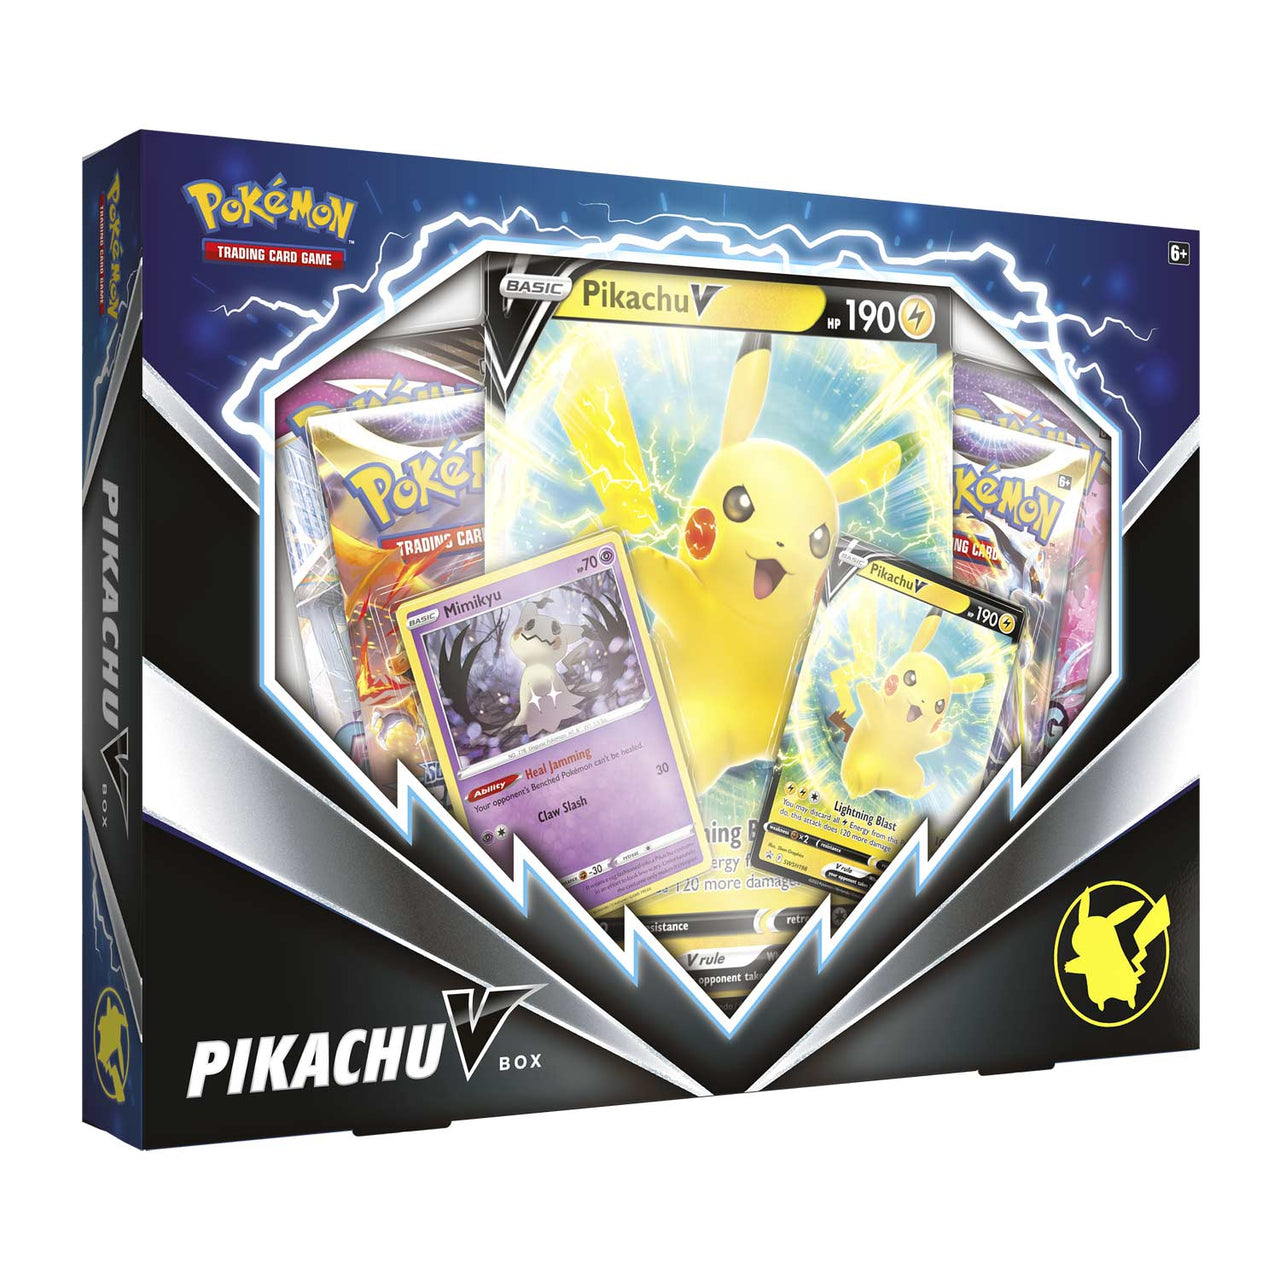 Pokémon TCG: Pikachu V Box - PokeRvmCollection Box